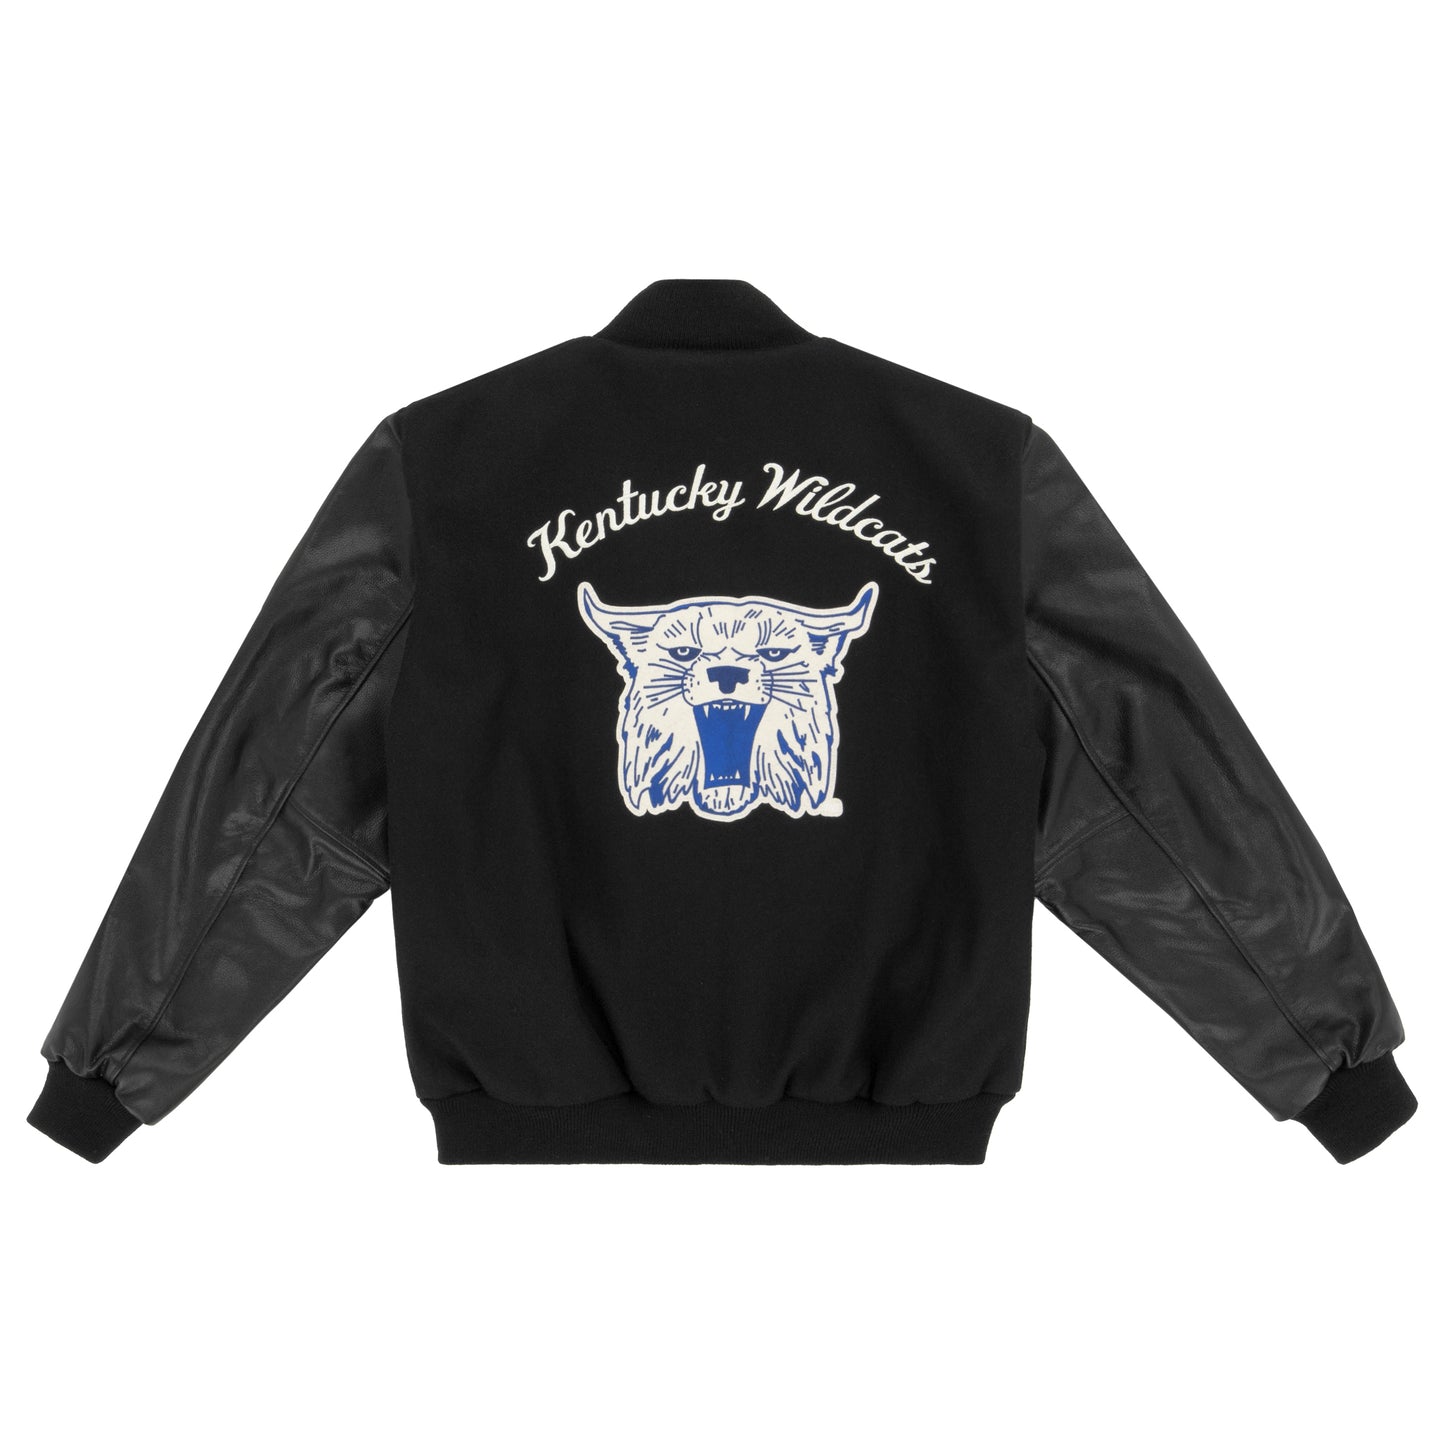 University of Kentucky 1965 Authentic Jacket